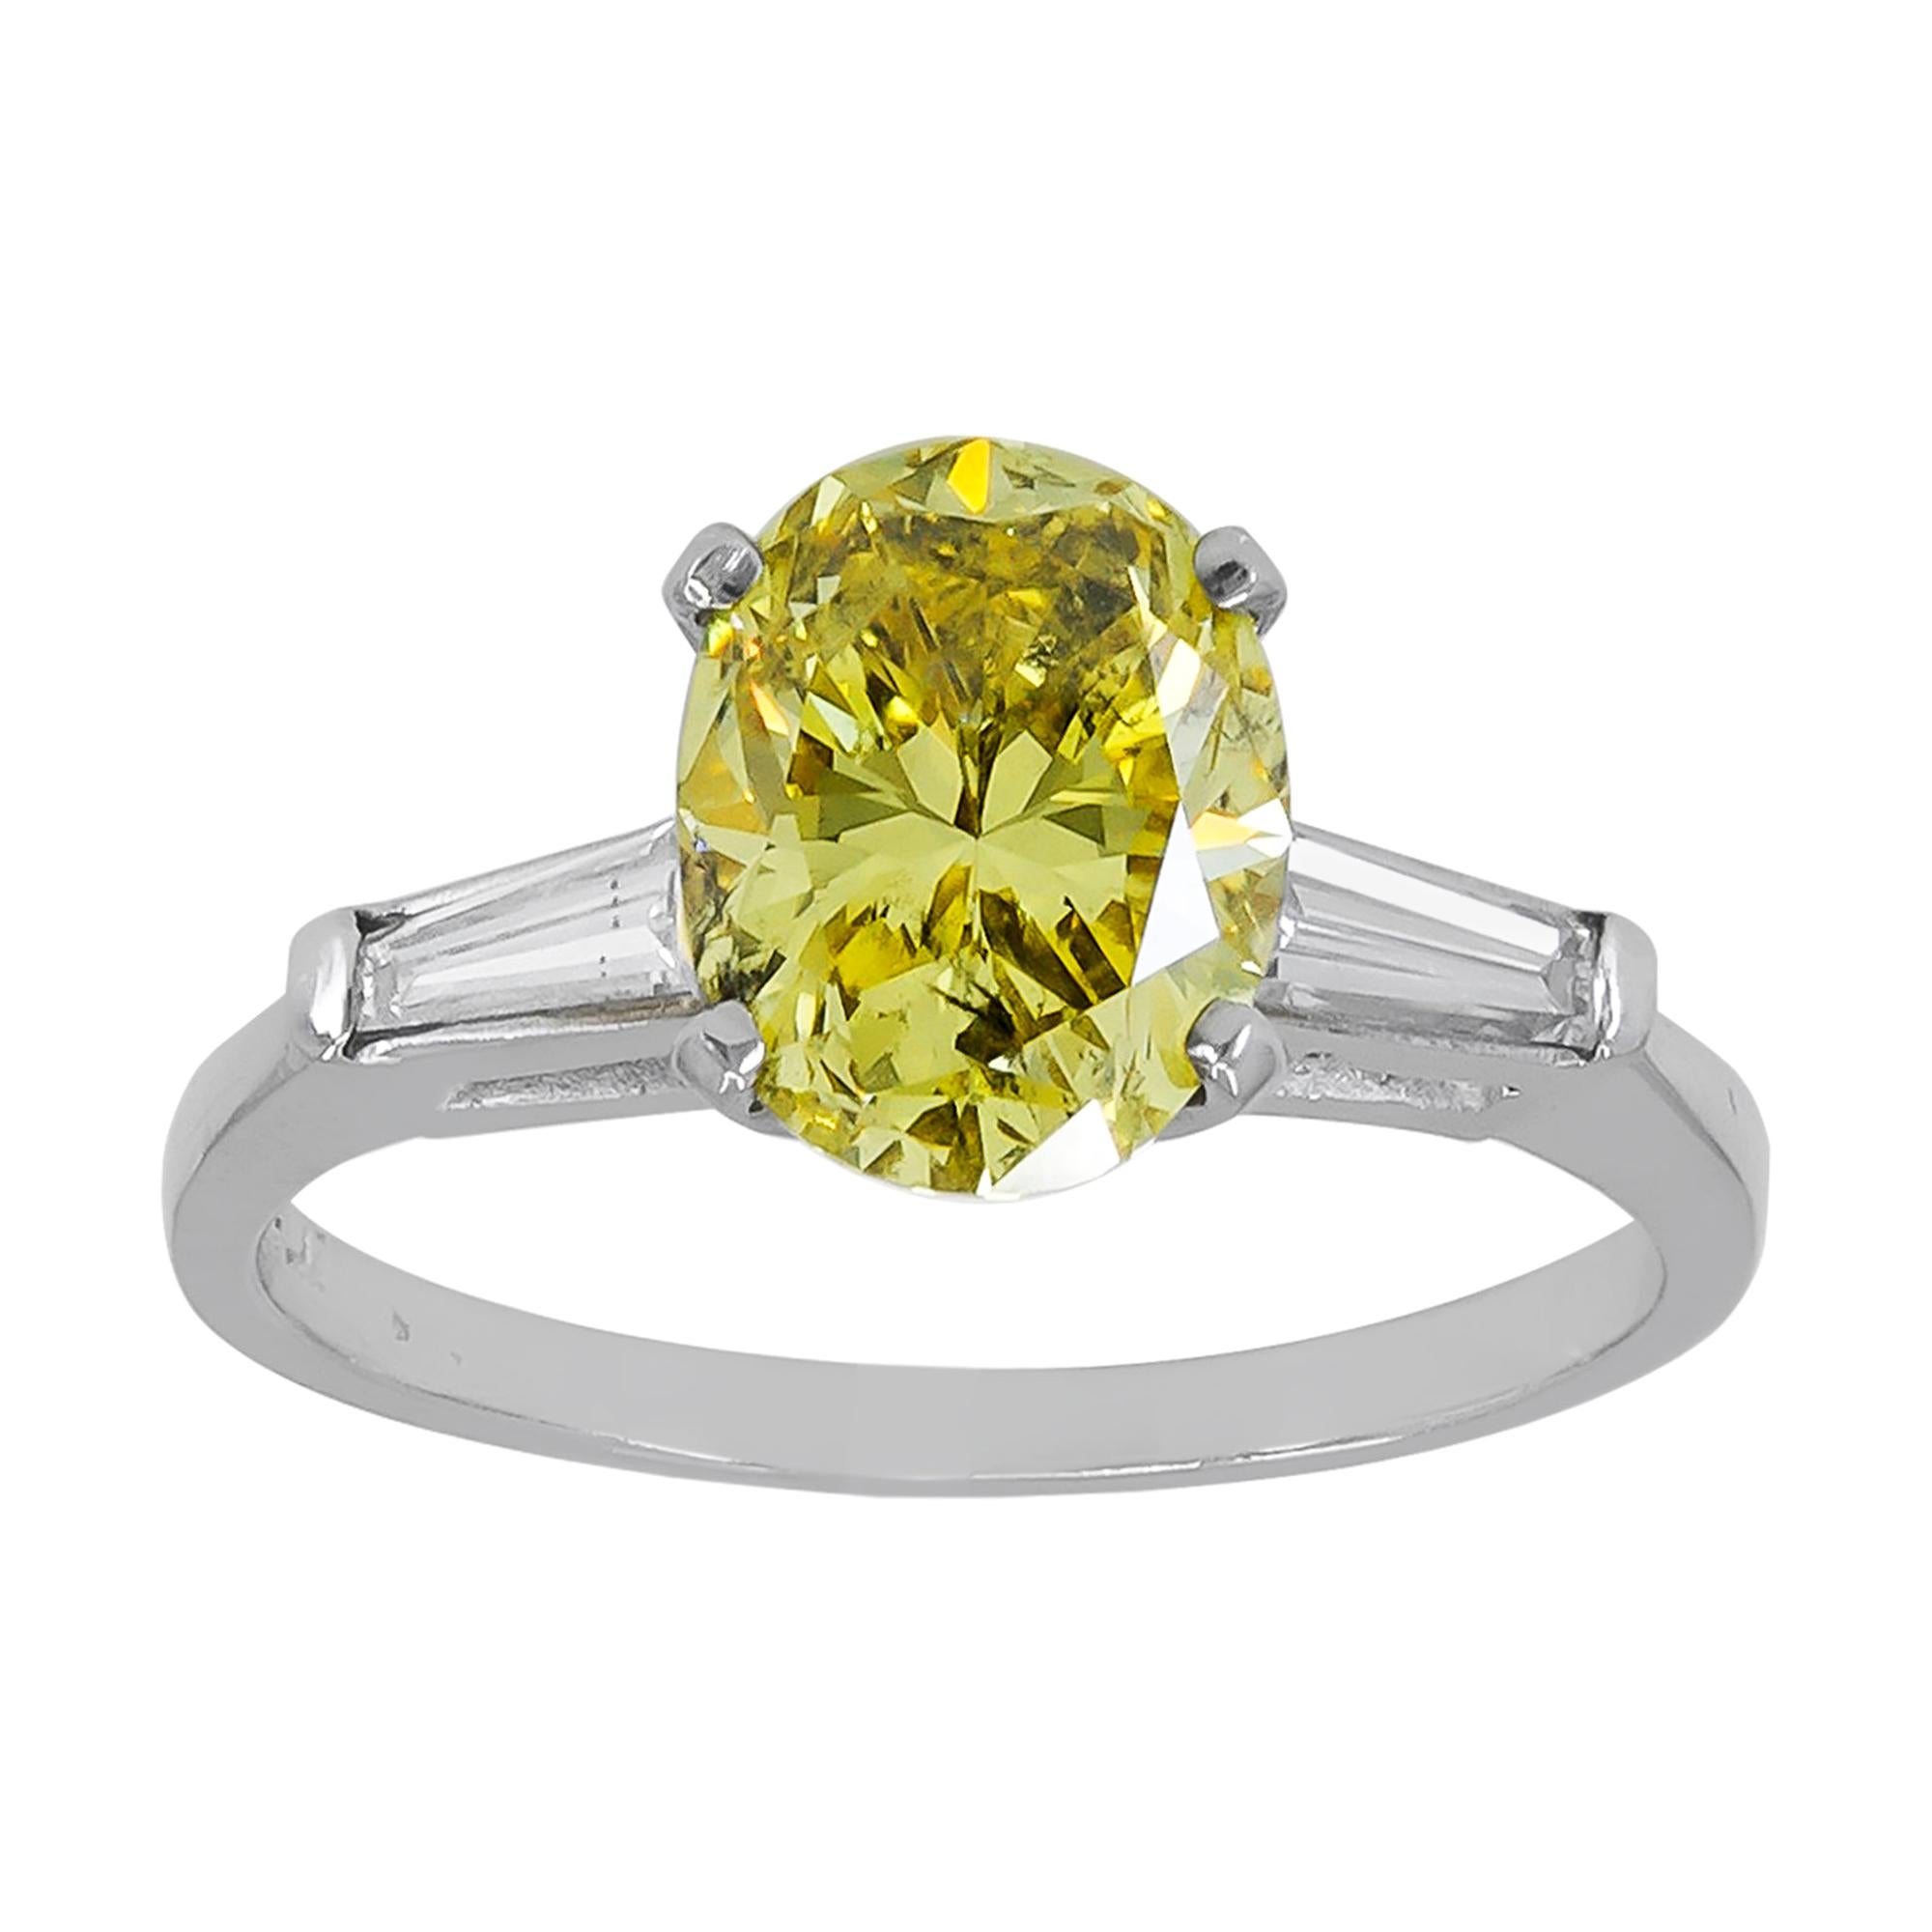 Spectra Fine Jewelry, GIA Certified 2.14 Carat Fancy Vivid Yellow Diamond Ring